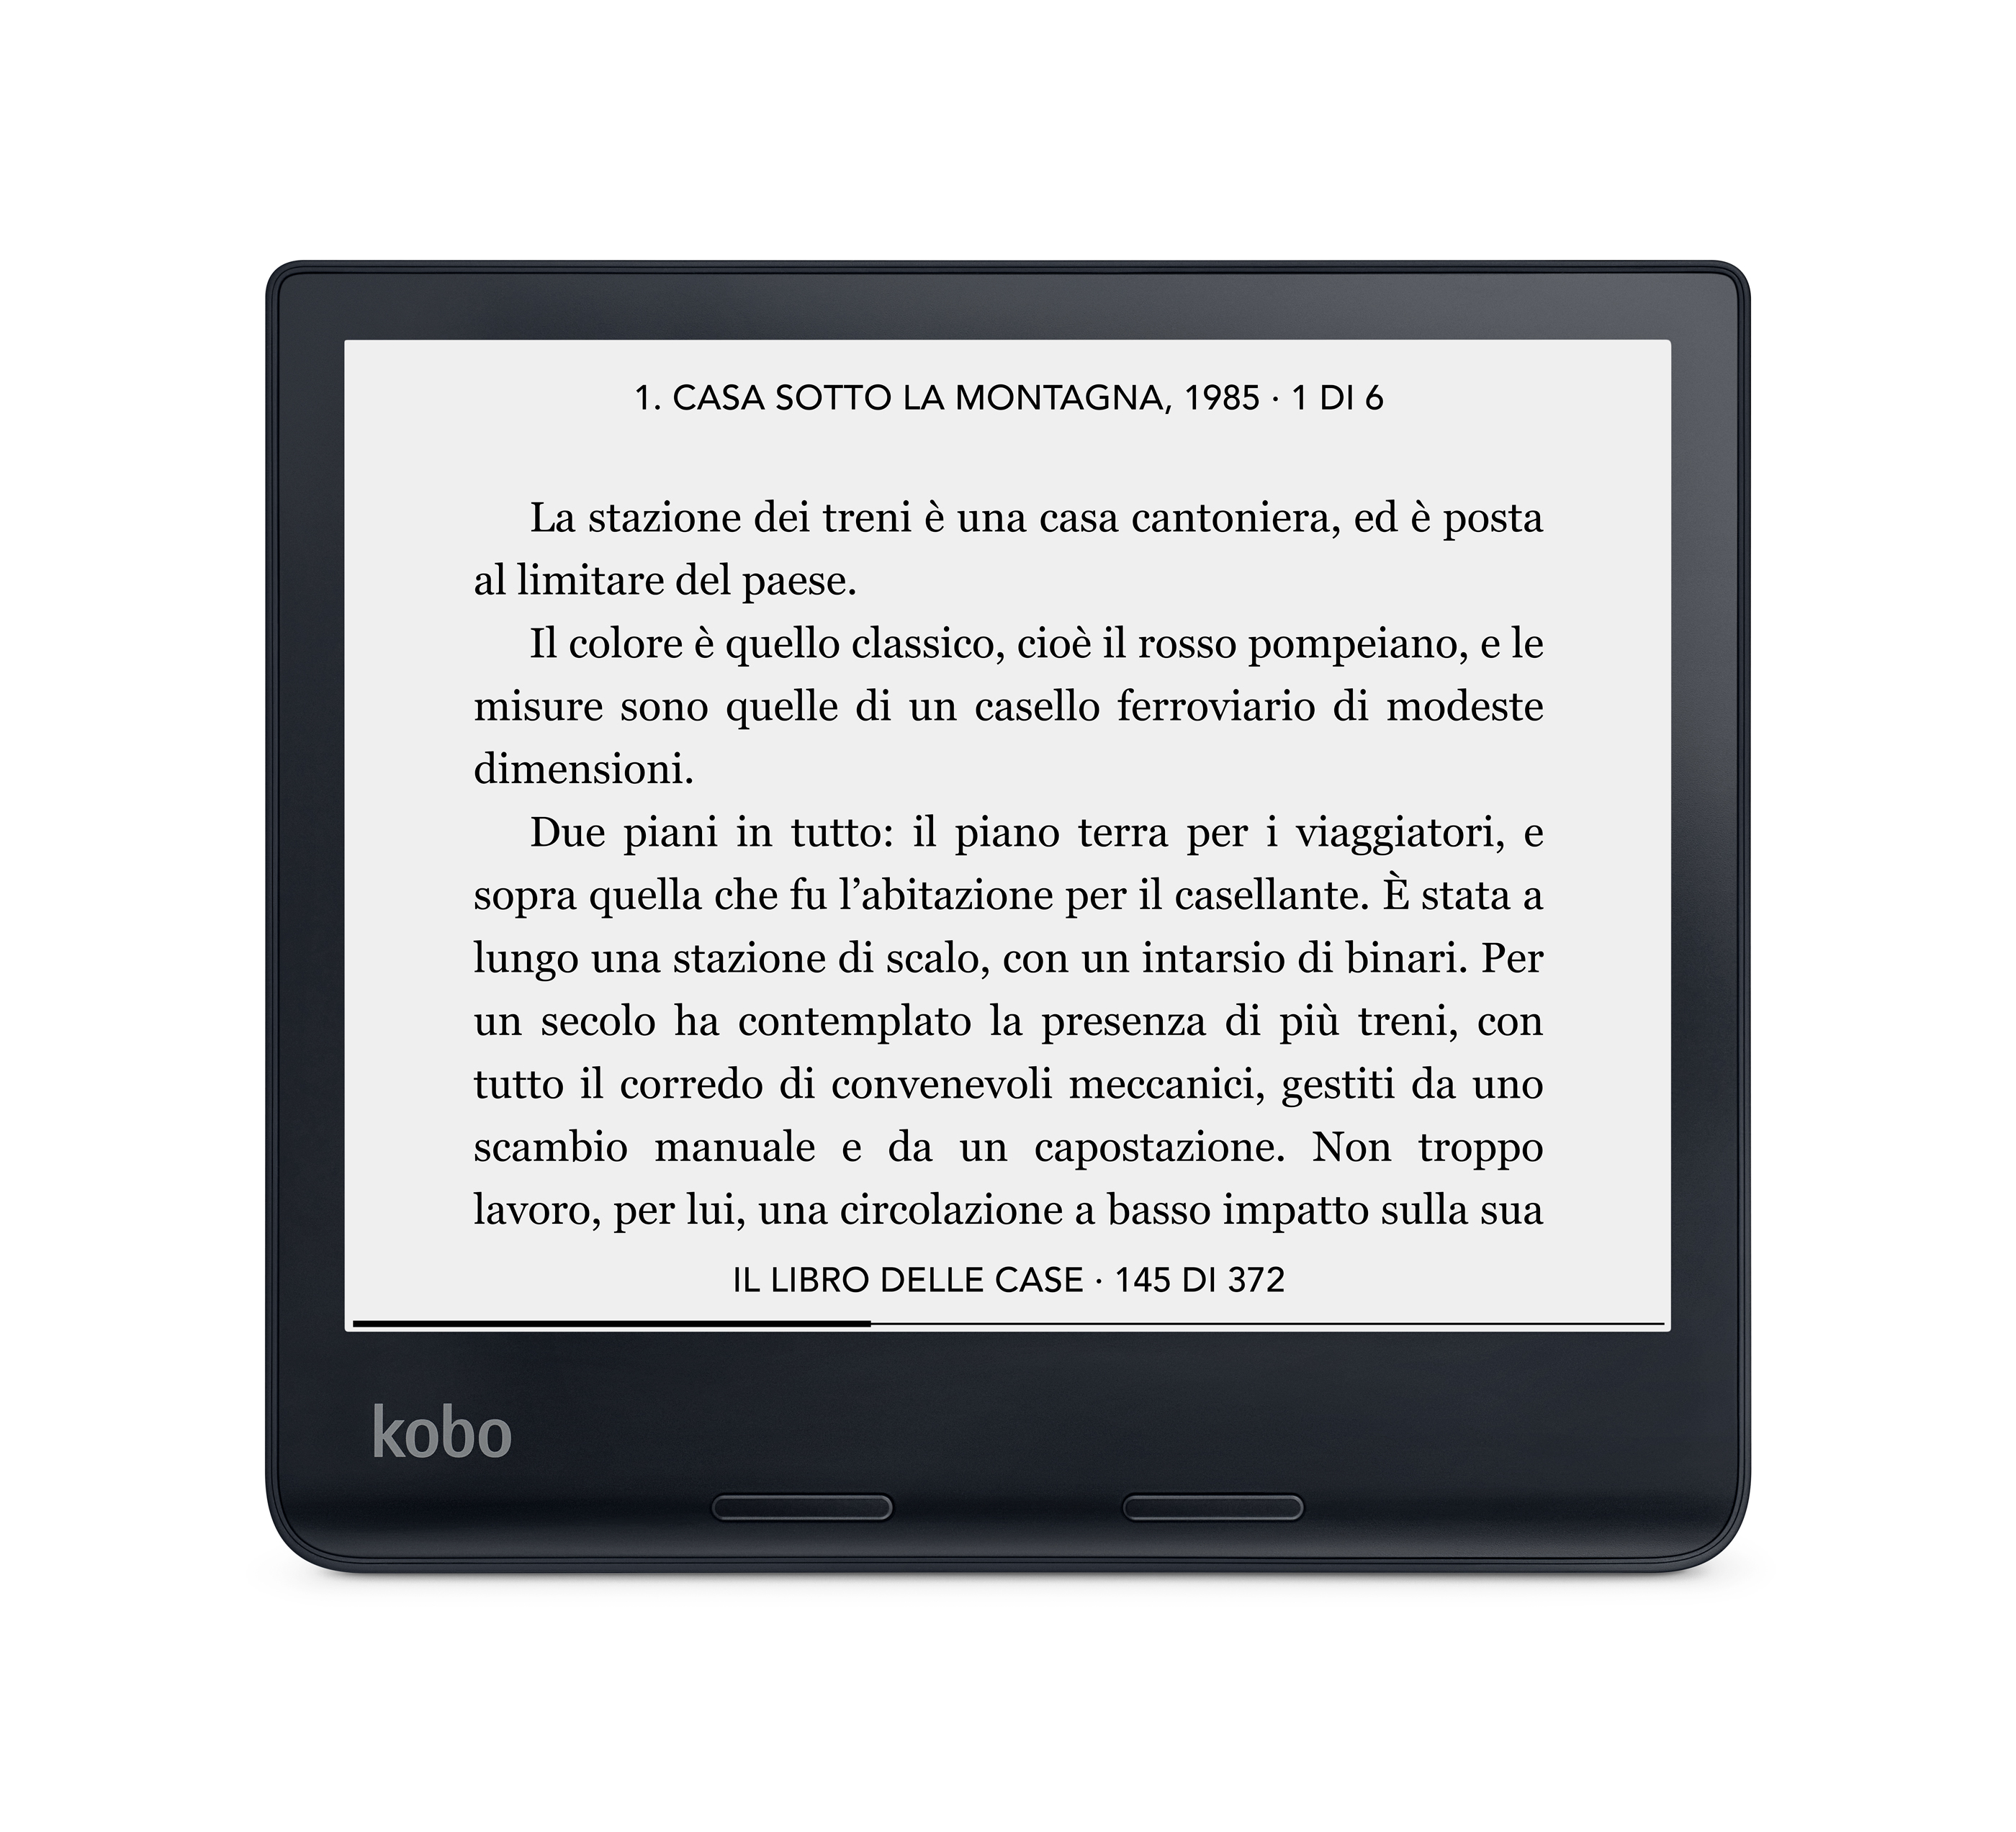 Kobo Sage - eBook-Reader - 32 GB - 20.3 cm (8")